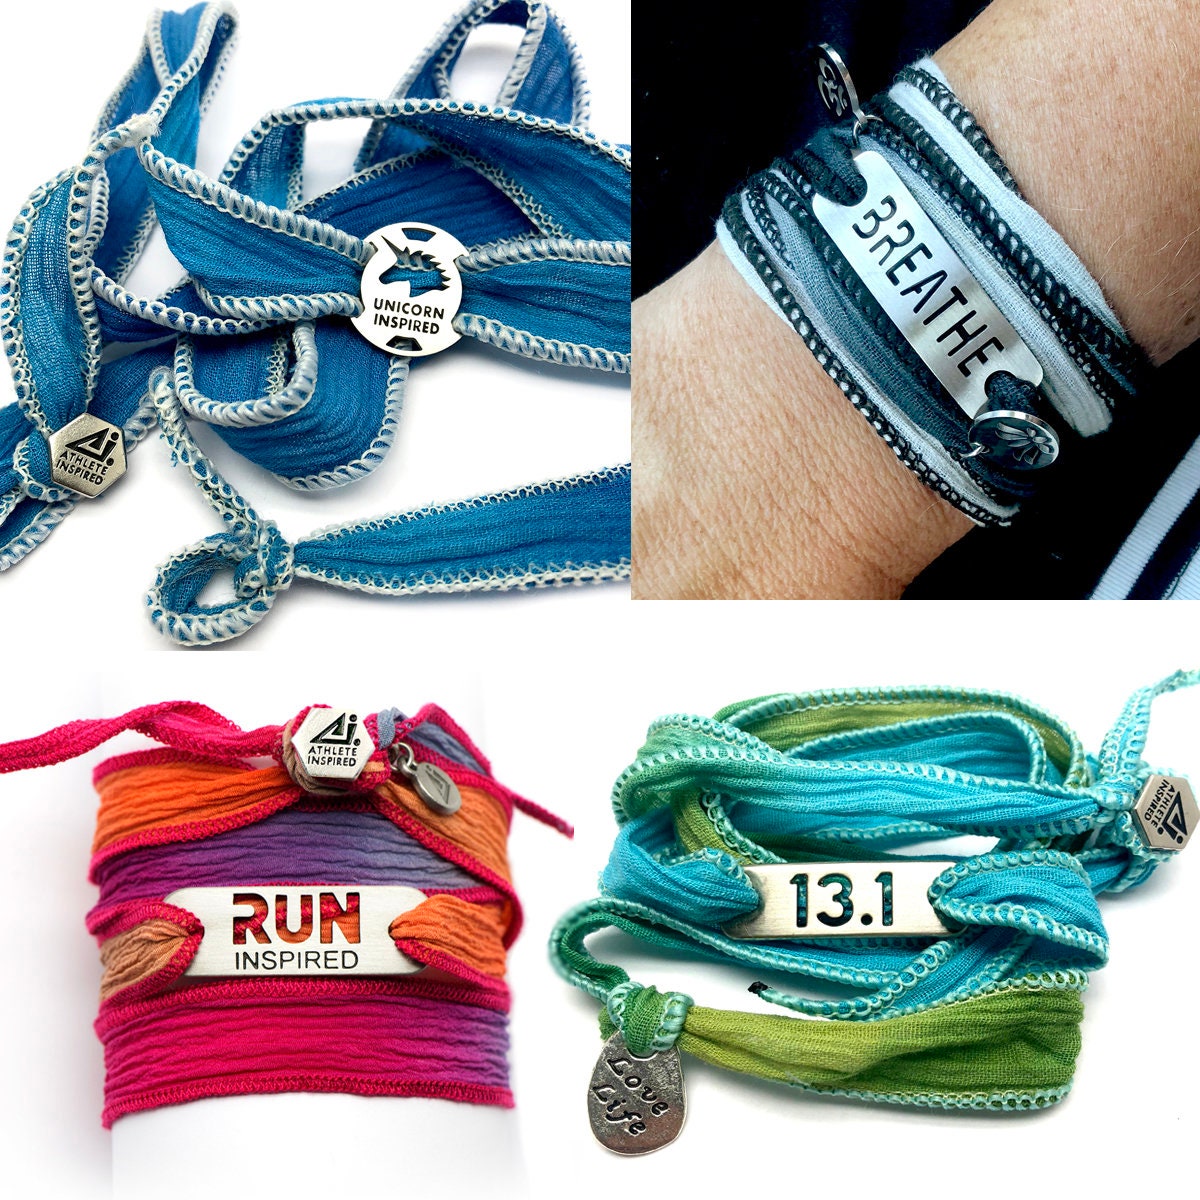 Inspirational Blended Button Wrap Bracelet - Athlete Inspired Motivational Jewelry, Gift For Runner, Motivation, Inspire, Courage, Strength